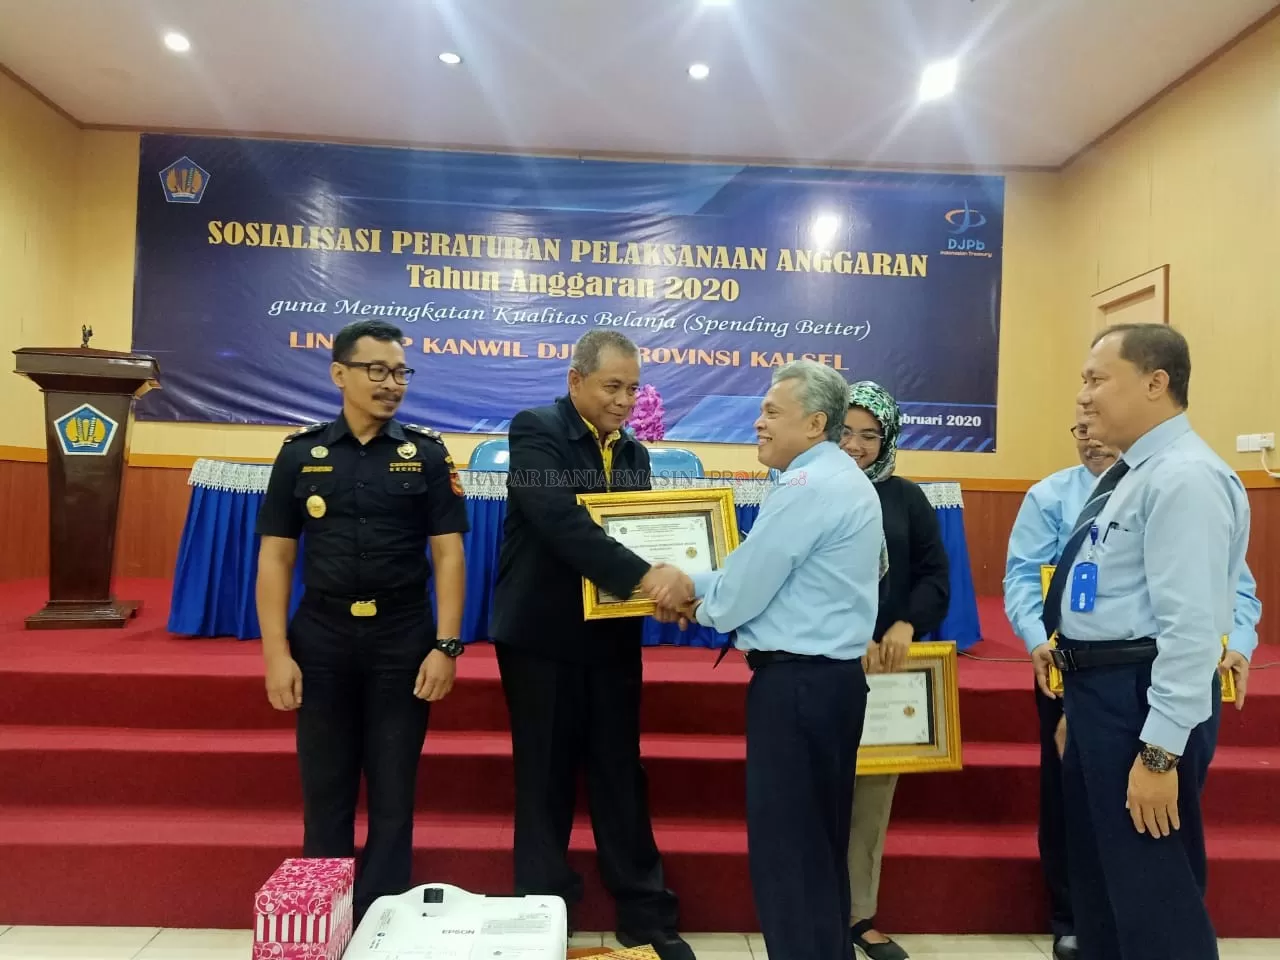 MEMBANGGAKAN: SMK Pertanian Pembangunan Negeri Banjarbaru menerima penghargaan dari Kementerian Keuangan.